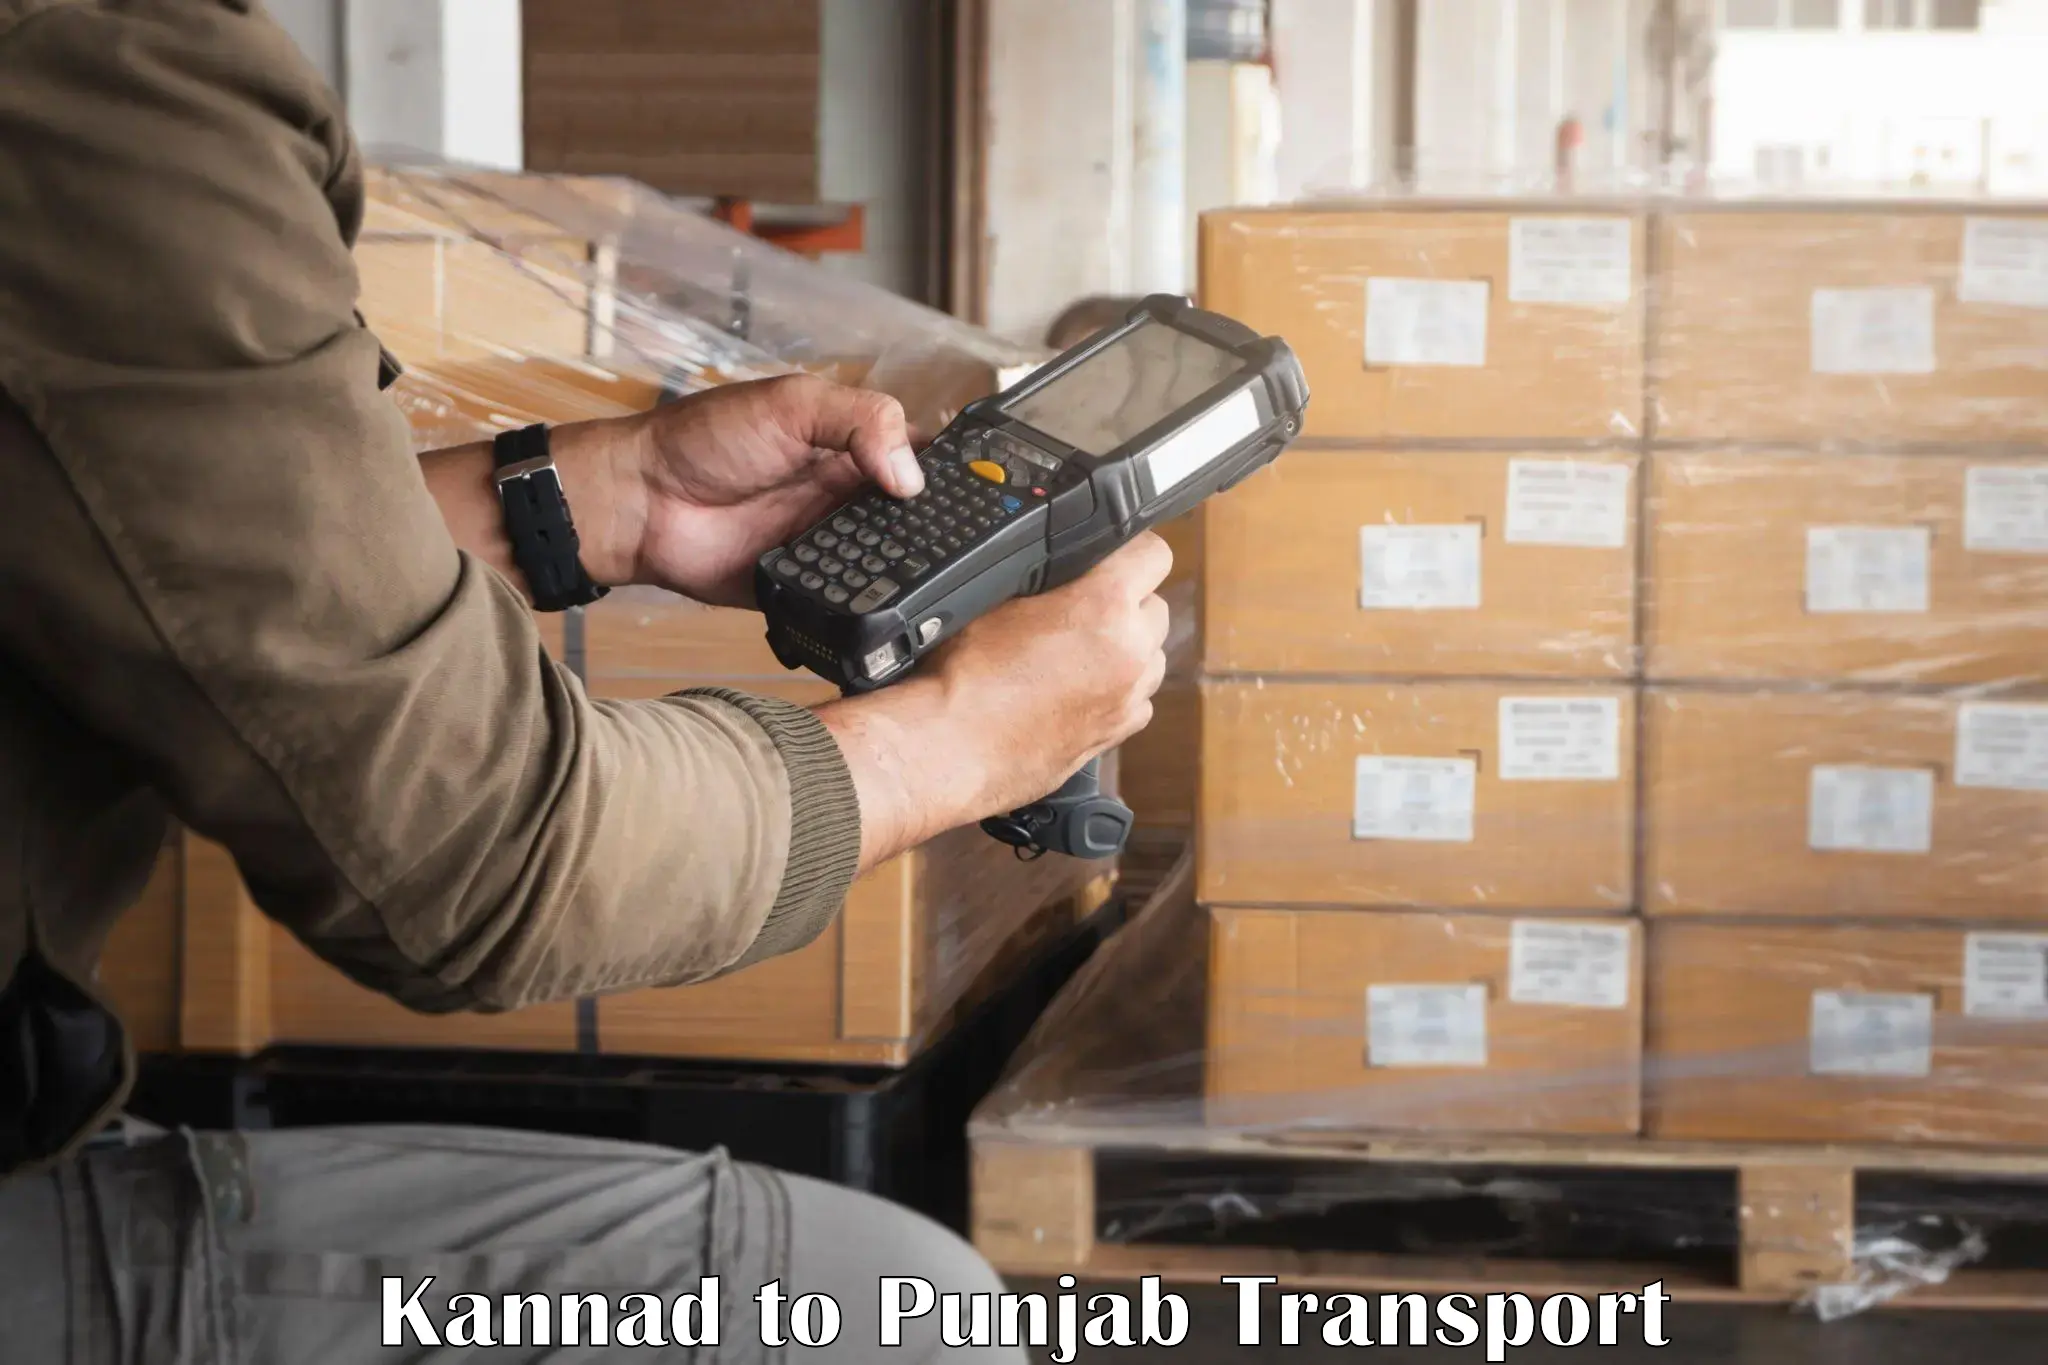 Cycle transportation service Kannad to Punjab